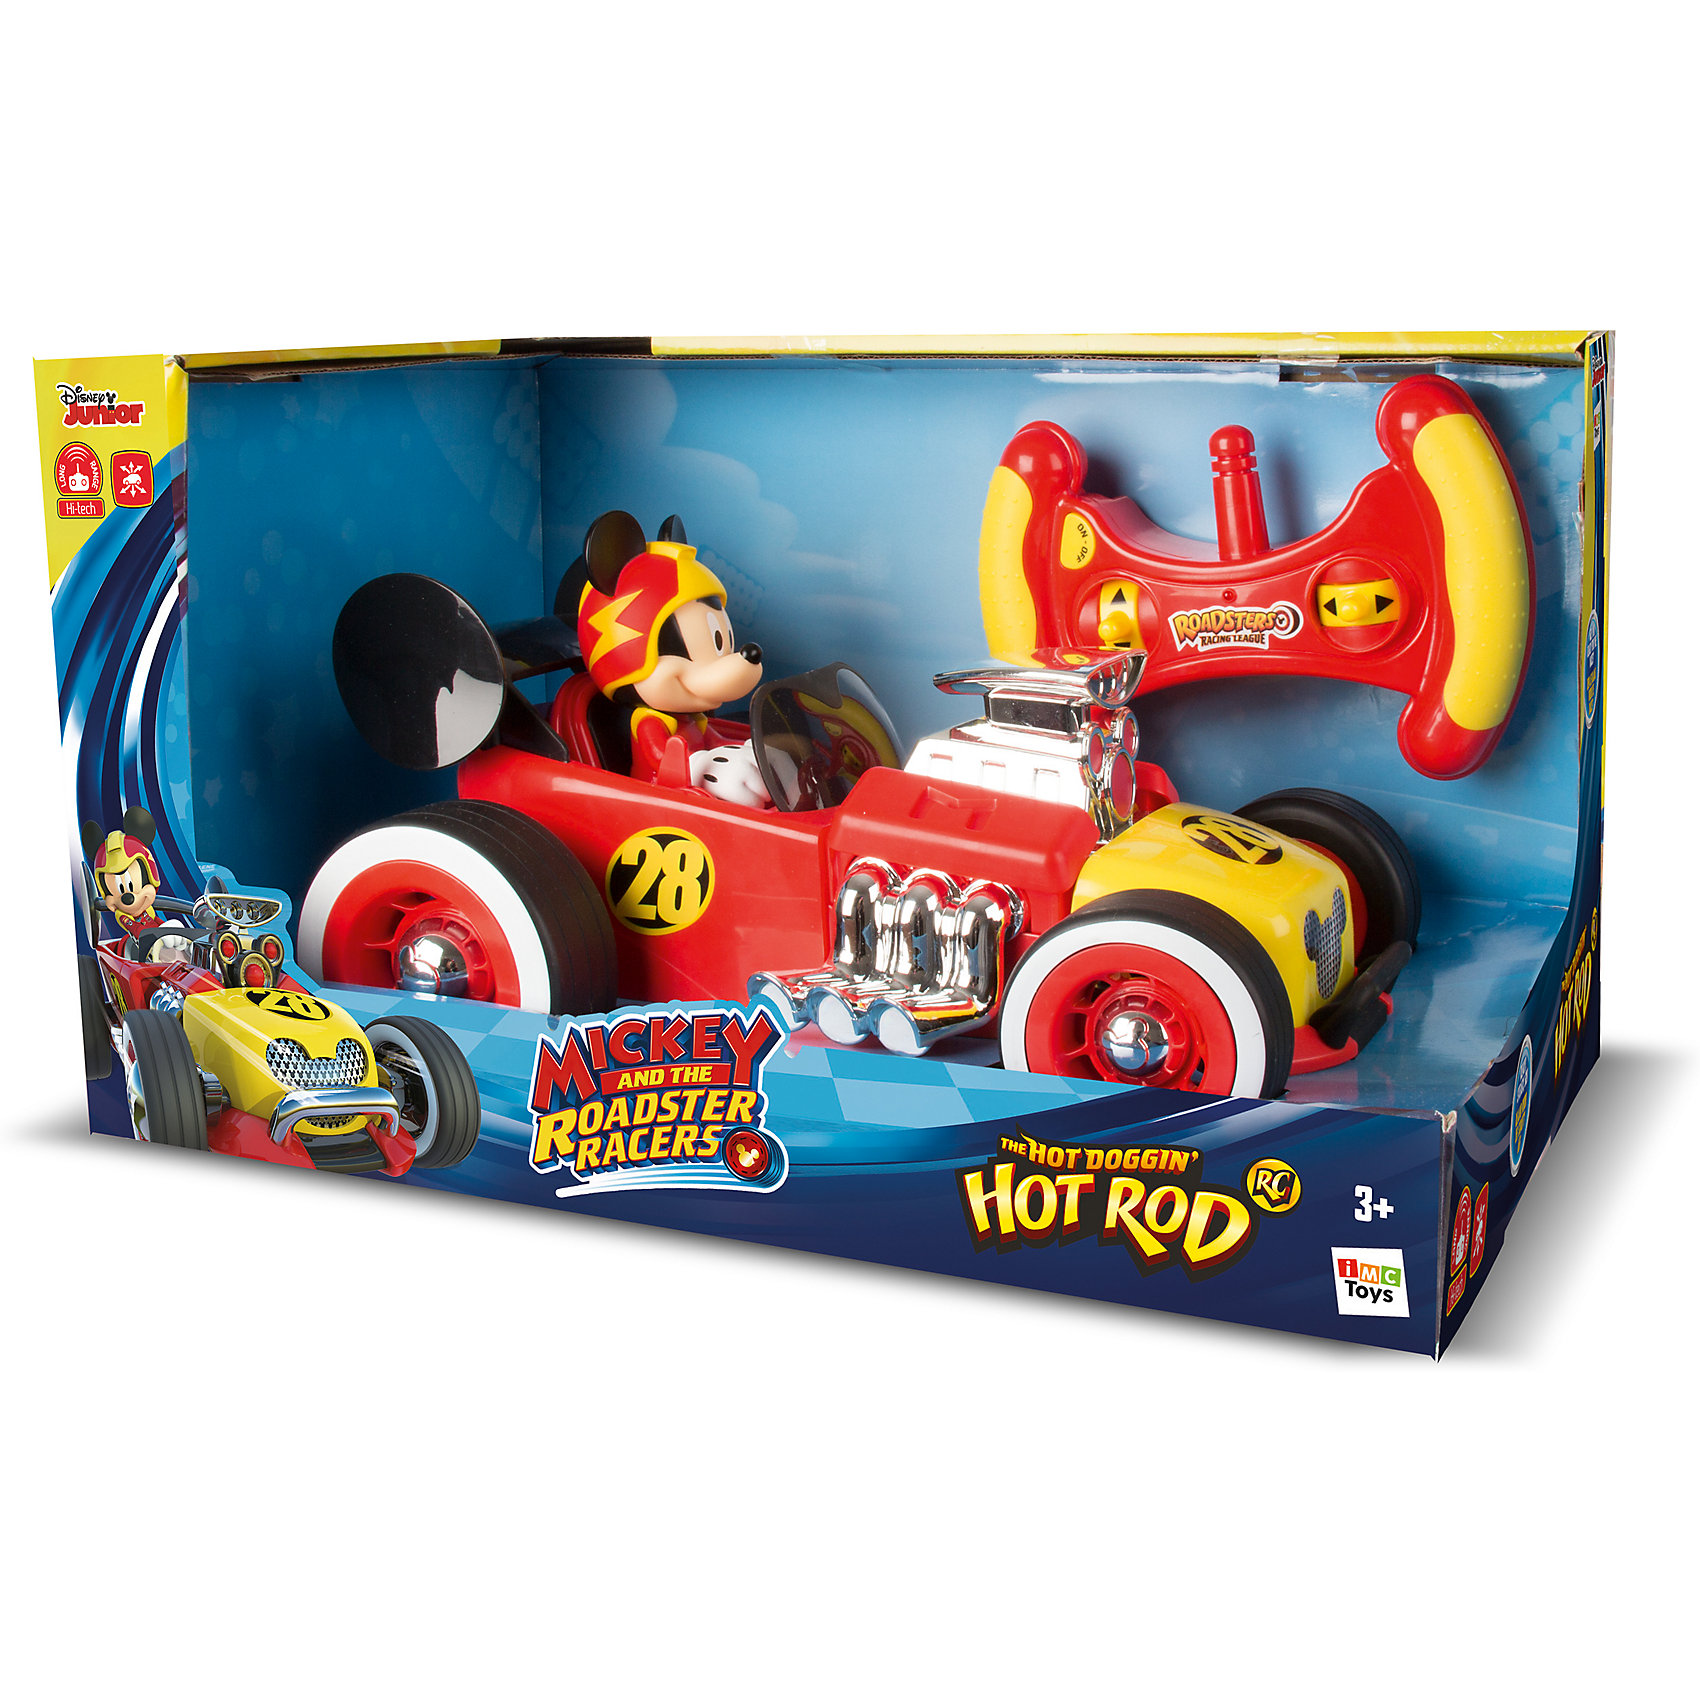 Disney Автомобиль р/у "Микки и весёлые гонки: Родстер Микки" (16 см) IMC Toys 8582006